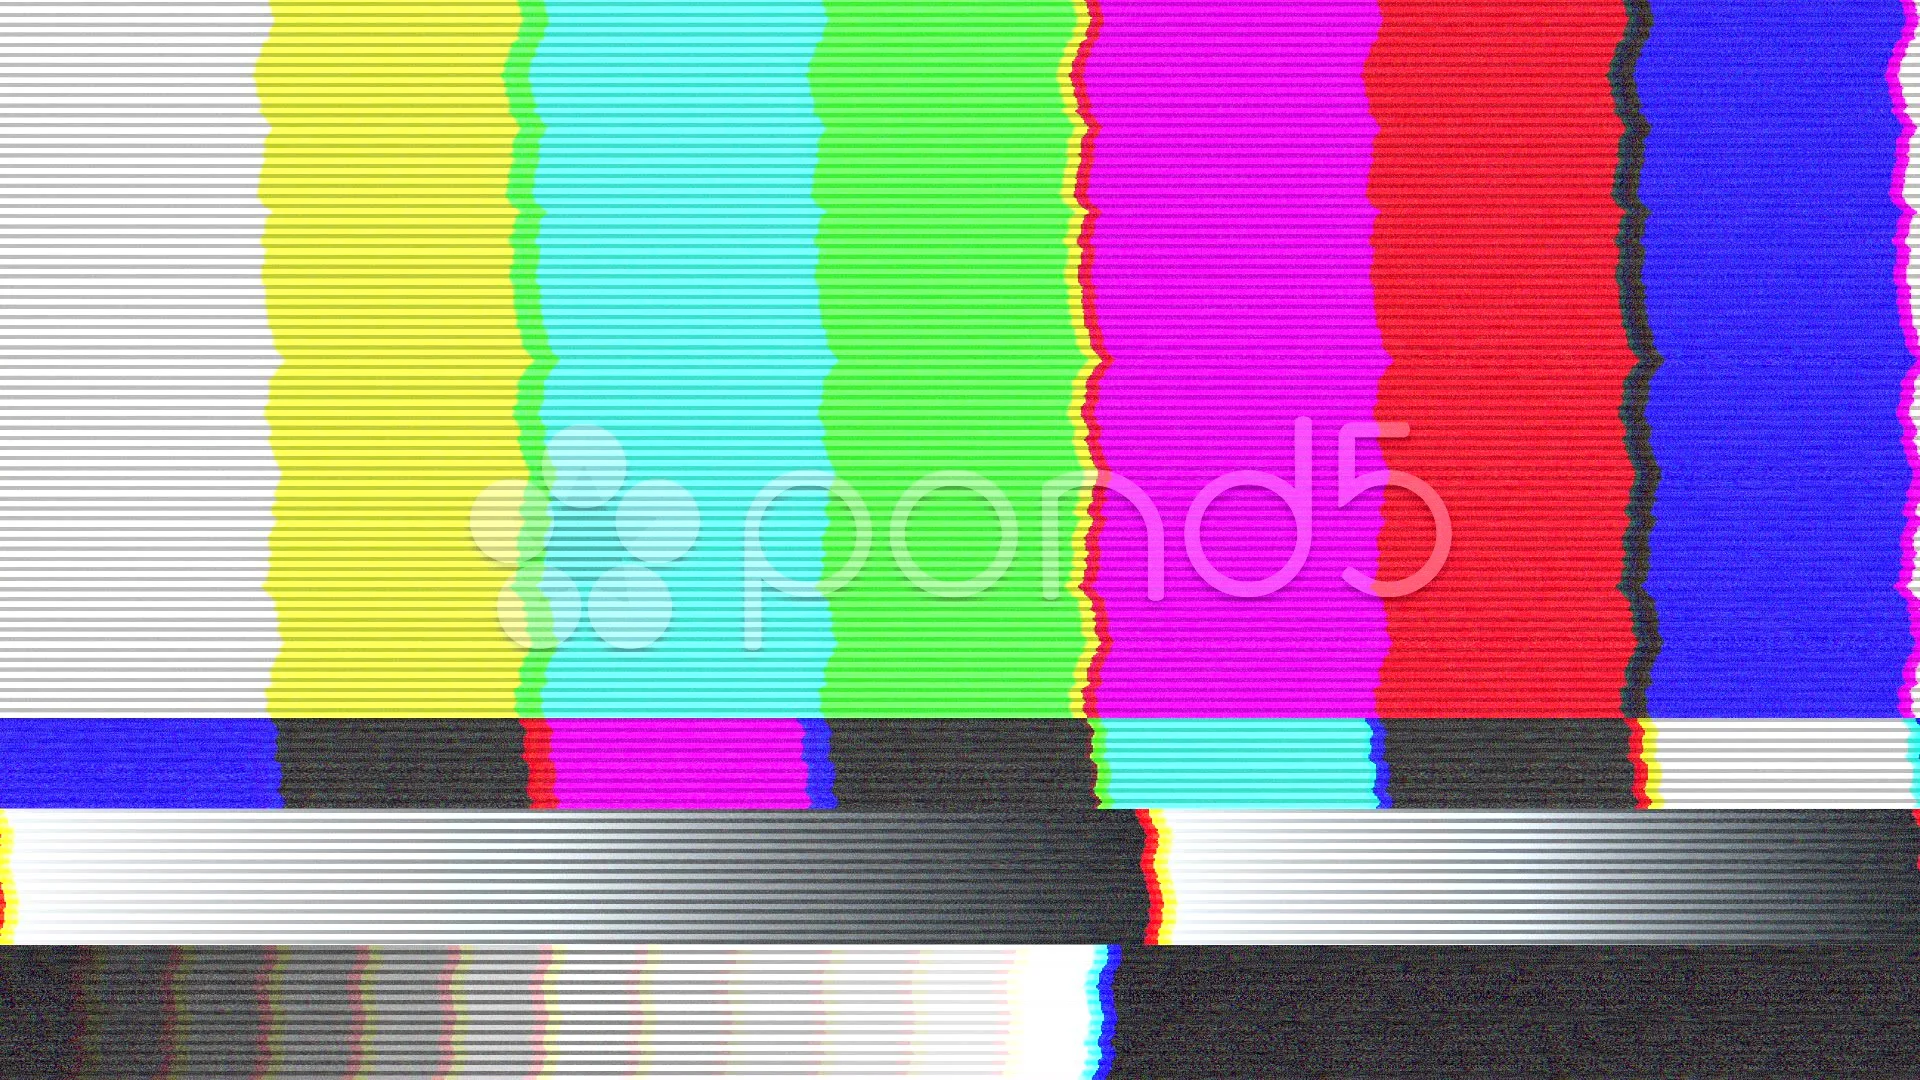 Телевизор ошибка видео. Полоски на телевизоре. Цветные полосы на телевизоре. Разноцветные полосы на телевизоре. Разноцветные полоски на экране.